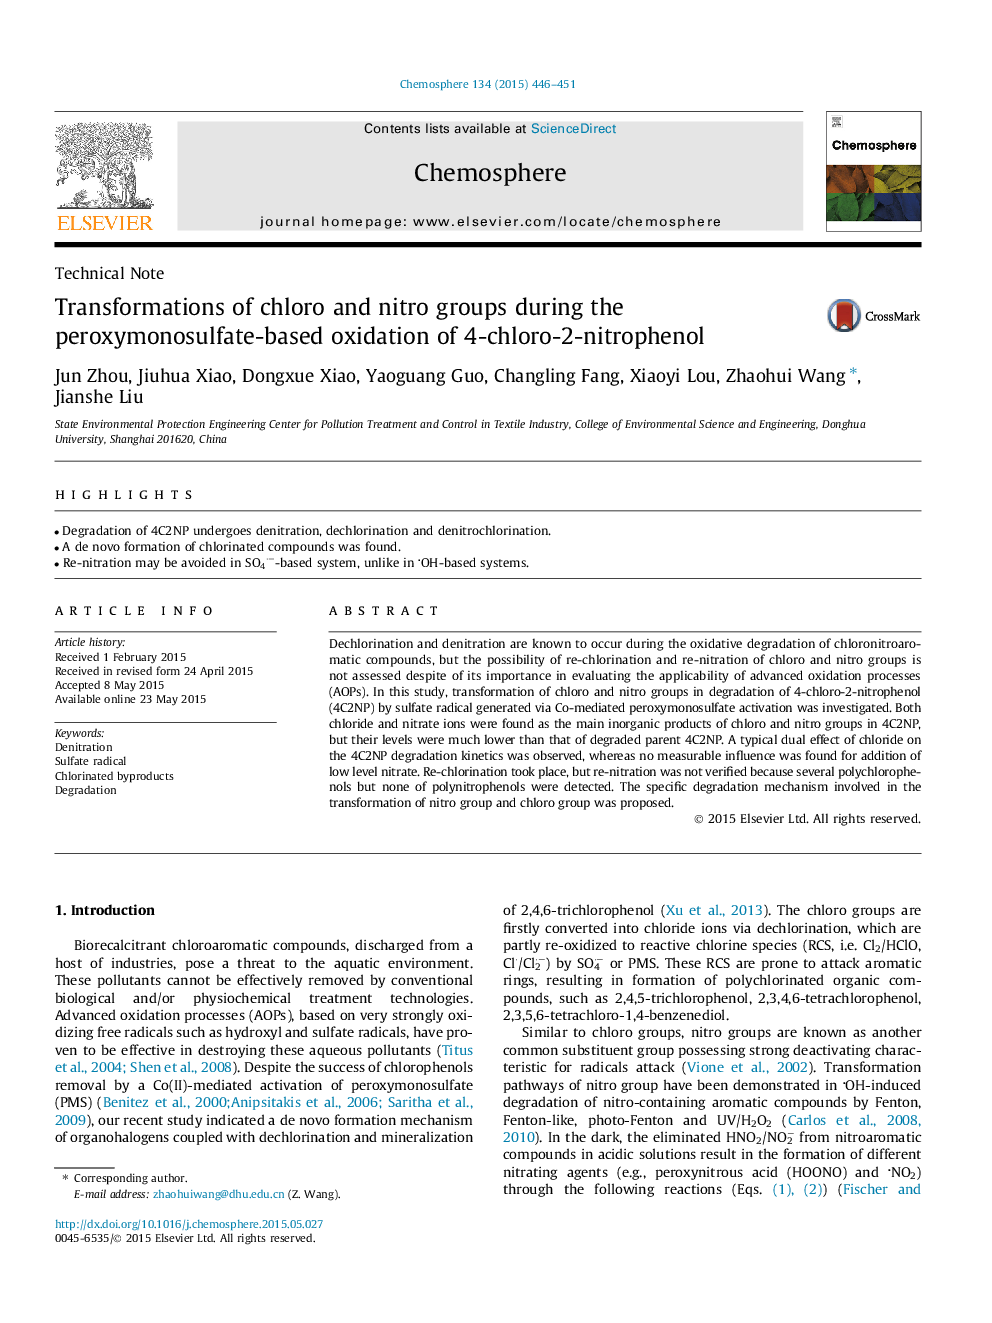 Transformations of chloro and nitro groups during the peroxymonosulfate-based oxidation of 4-chloro-2-nitrophenol